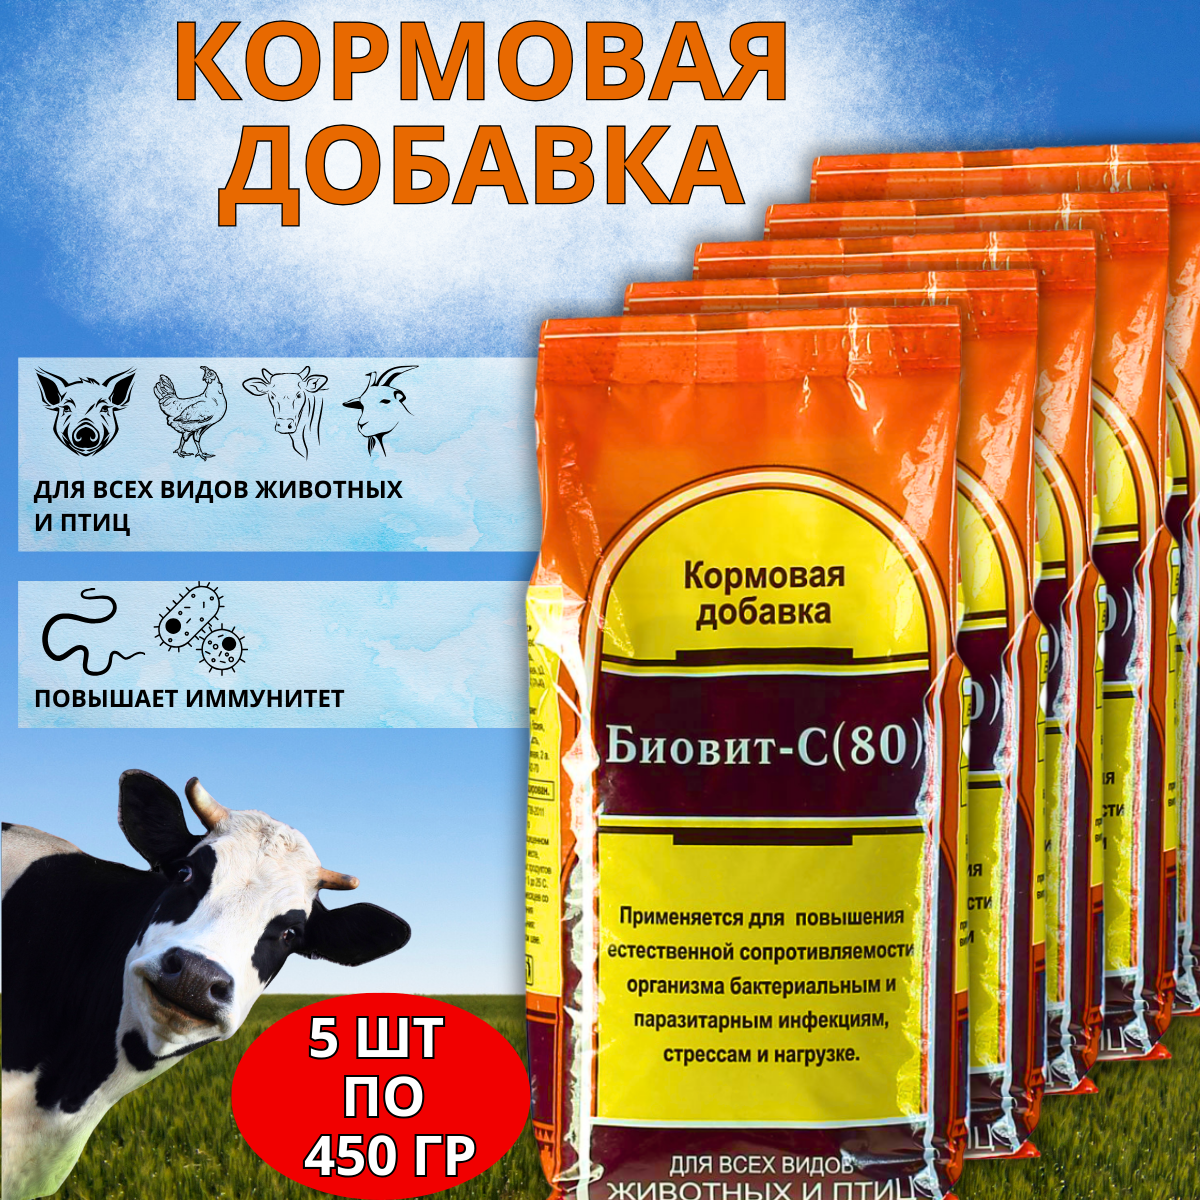 Кормовая добавка Биовит-80 10%, 5 шт по 450 г